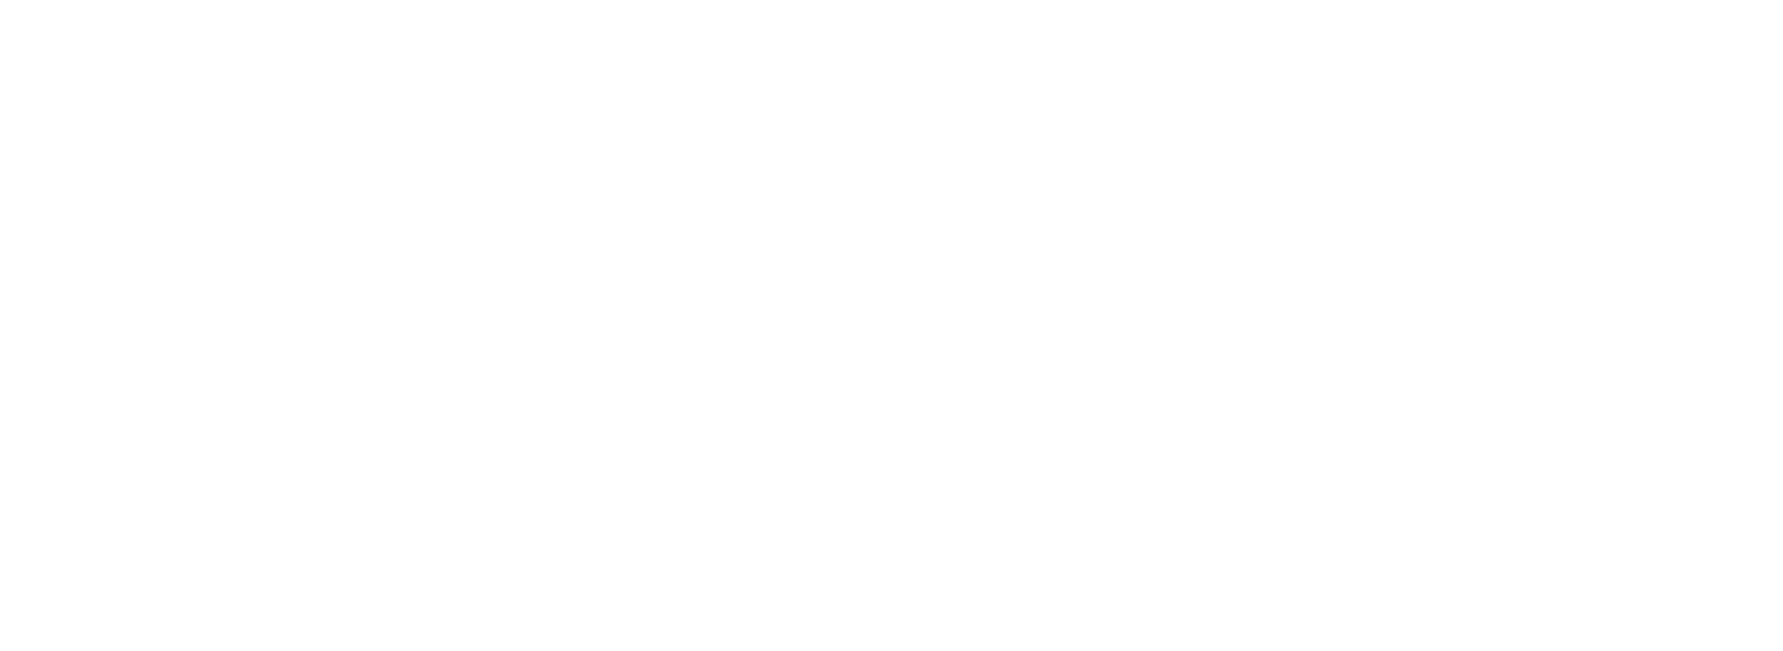 Nothern powergrid